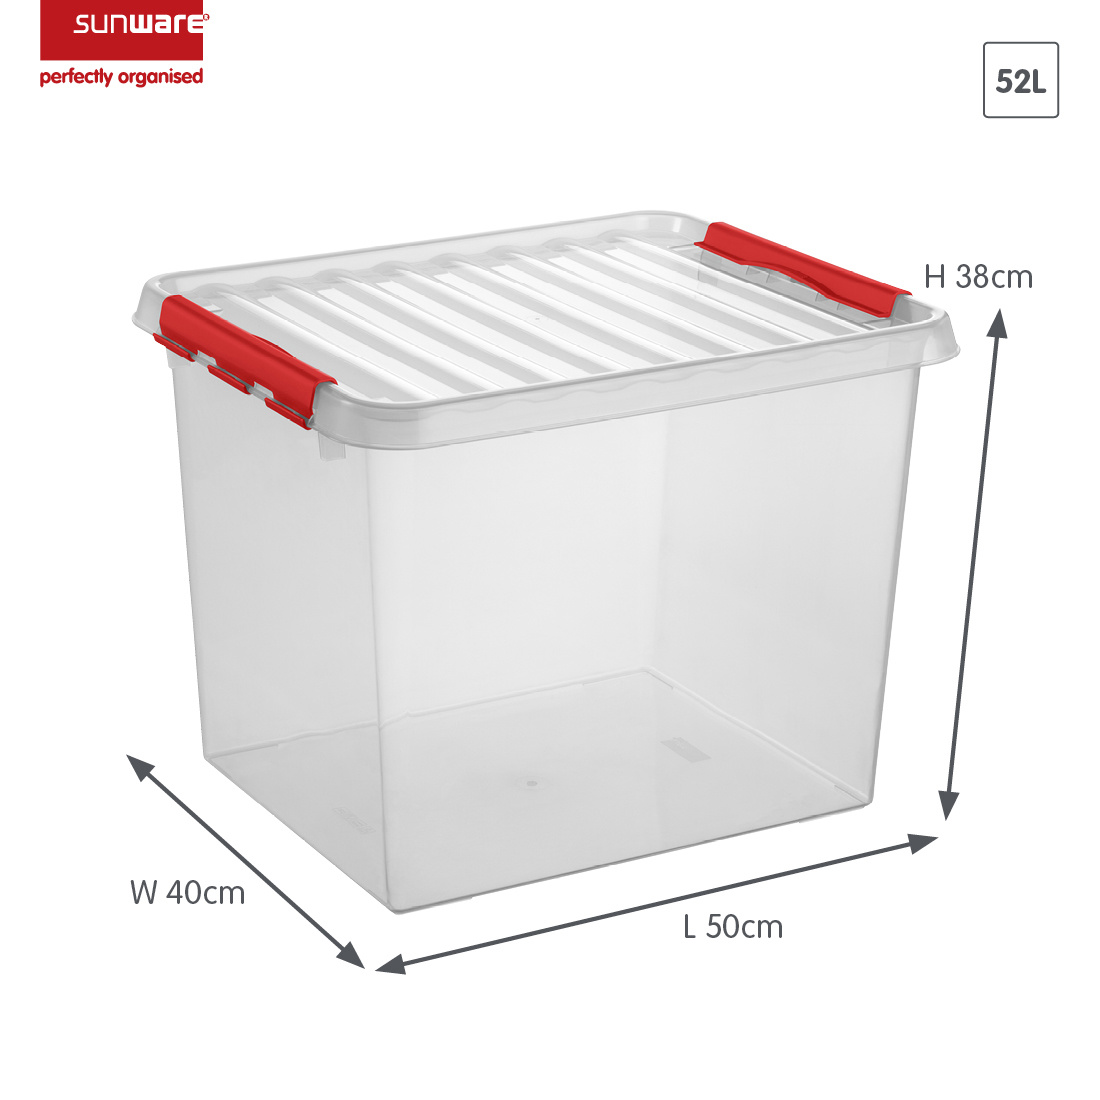 Q-line storage box 52L transparent red